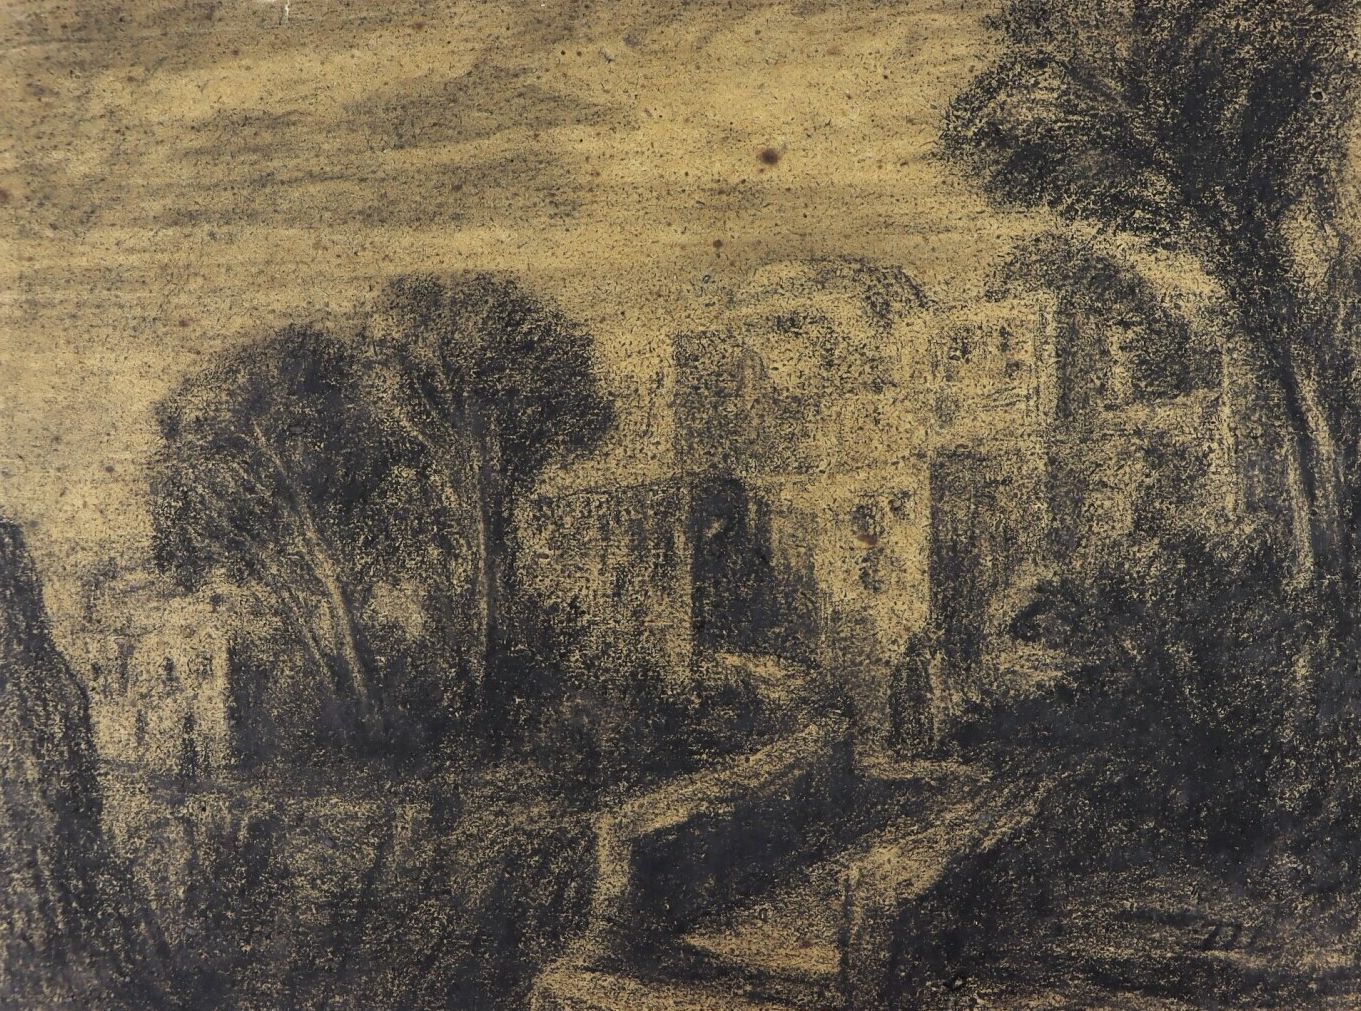 Null 亚历山大-加布里埃尔-迪卡姆斯（1803-1860）。

卡斯巴。

木炭。

右下角有图案。

高_26,5厘米，宽_35厘米